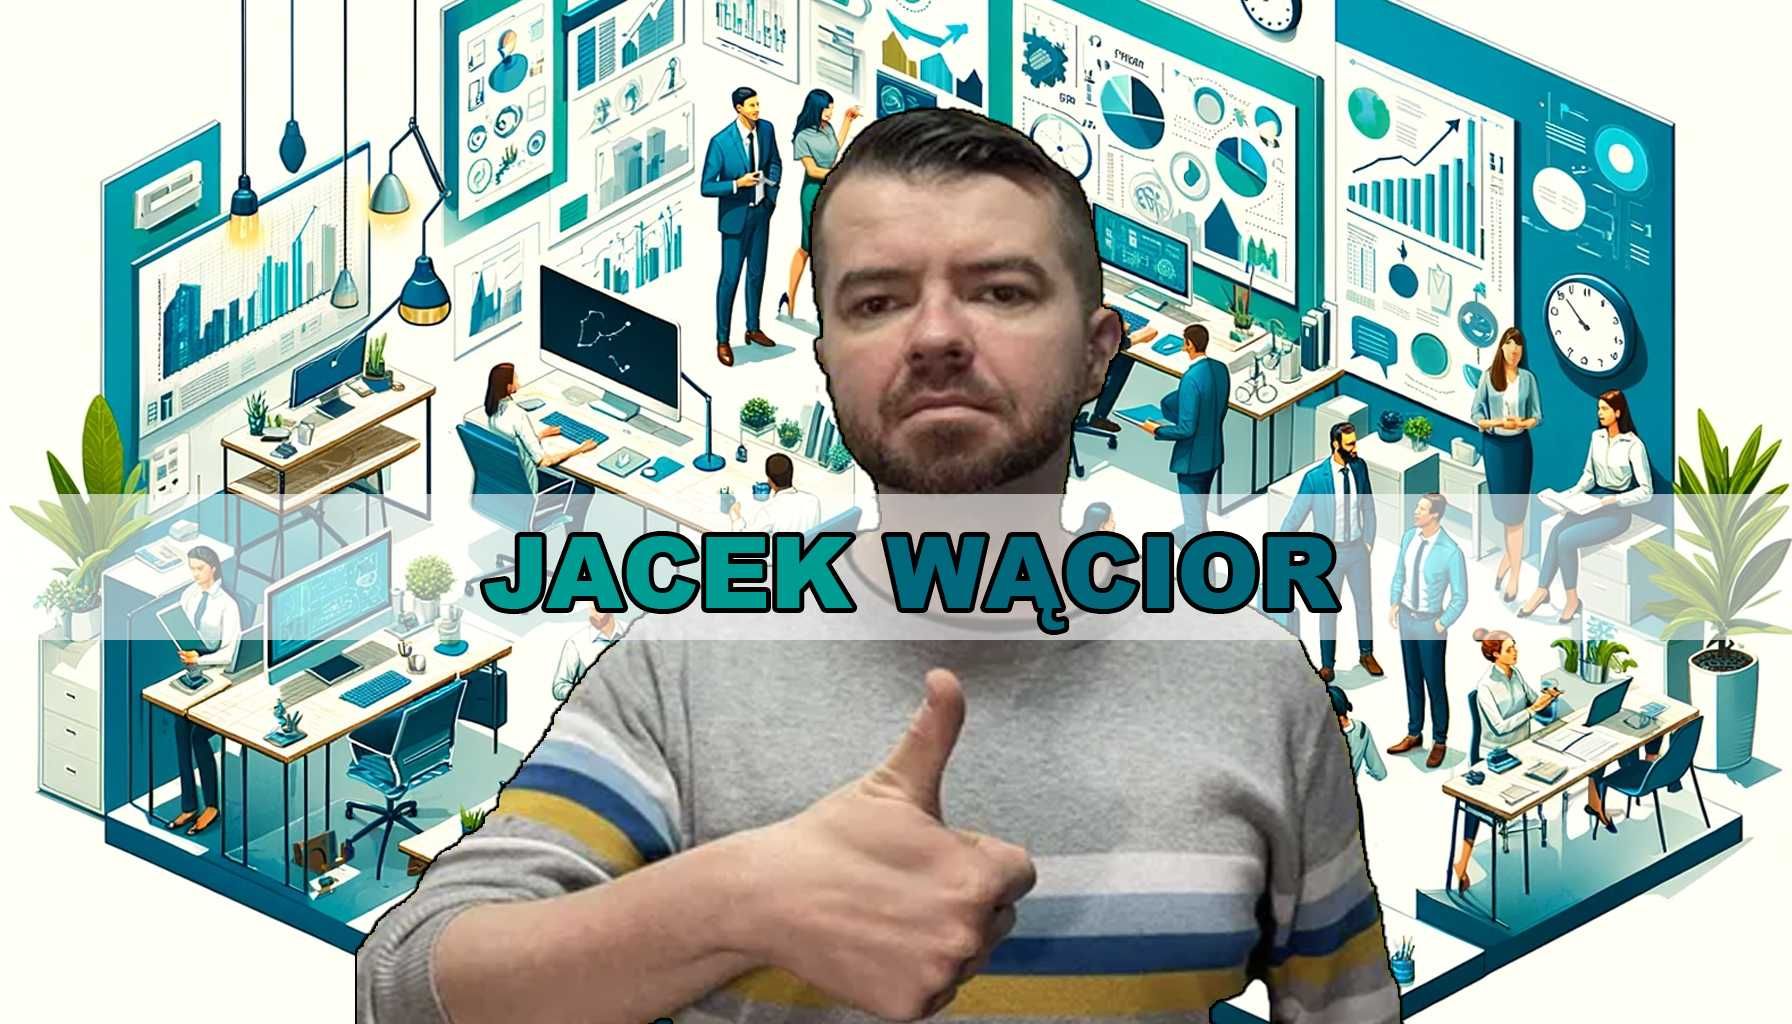 JACEK WACIOR Pro Freelancer Prace Biurowe Data Entry Informatyk Online